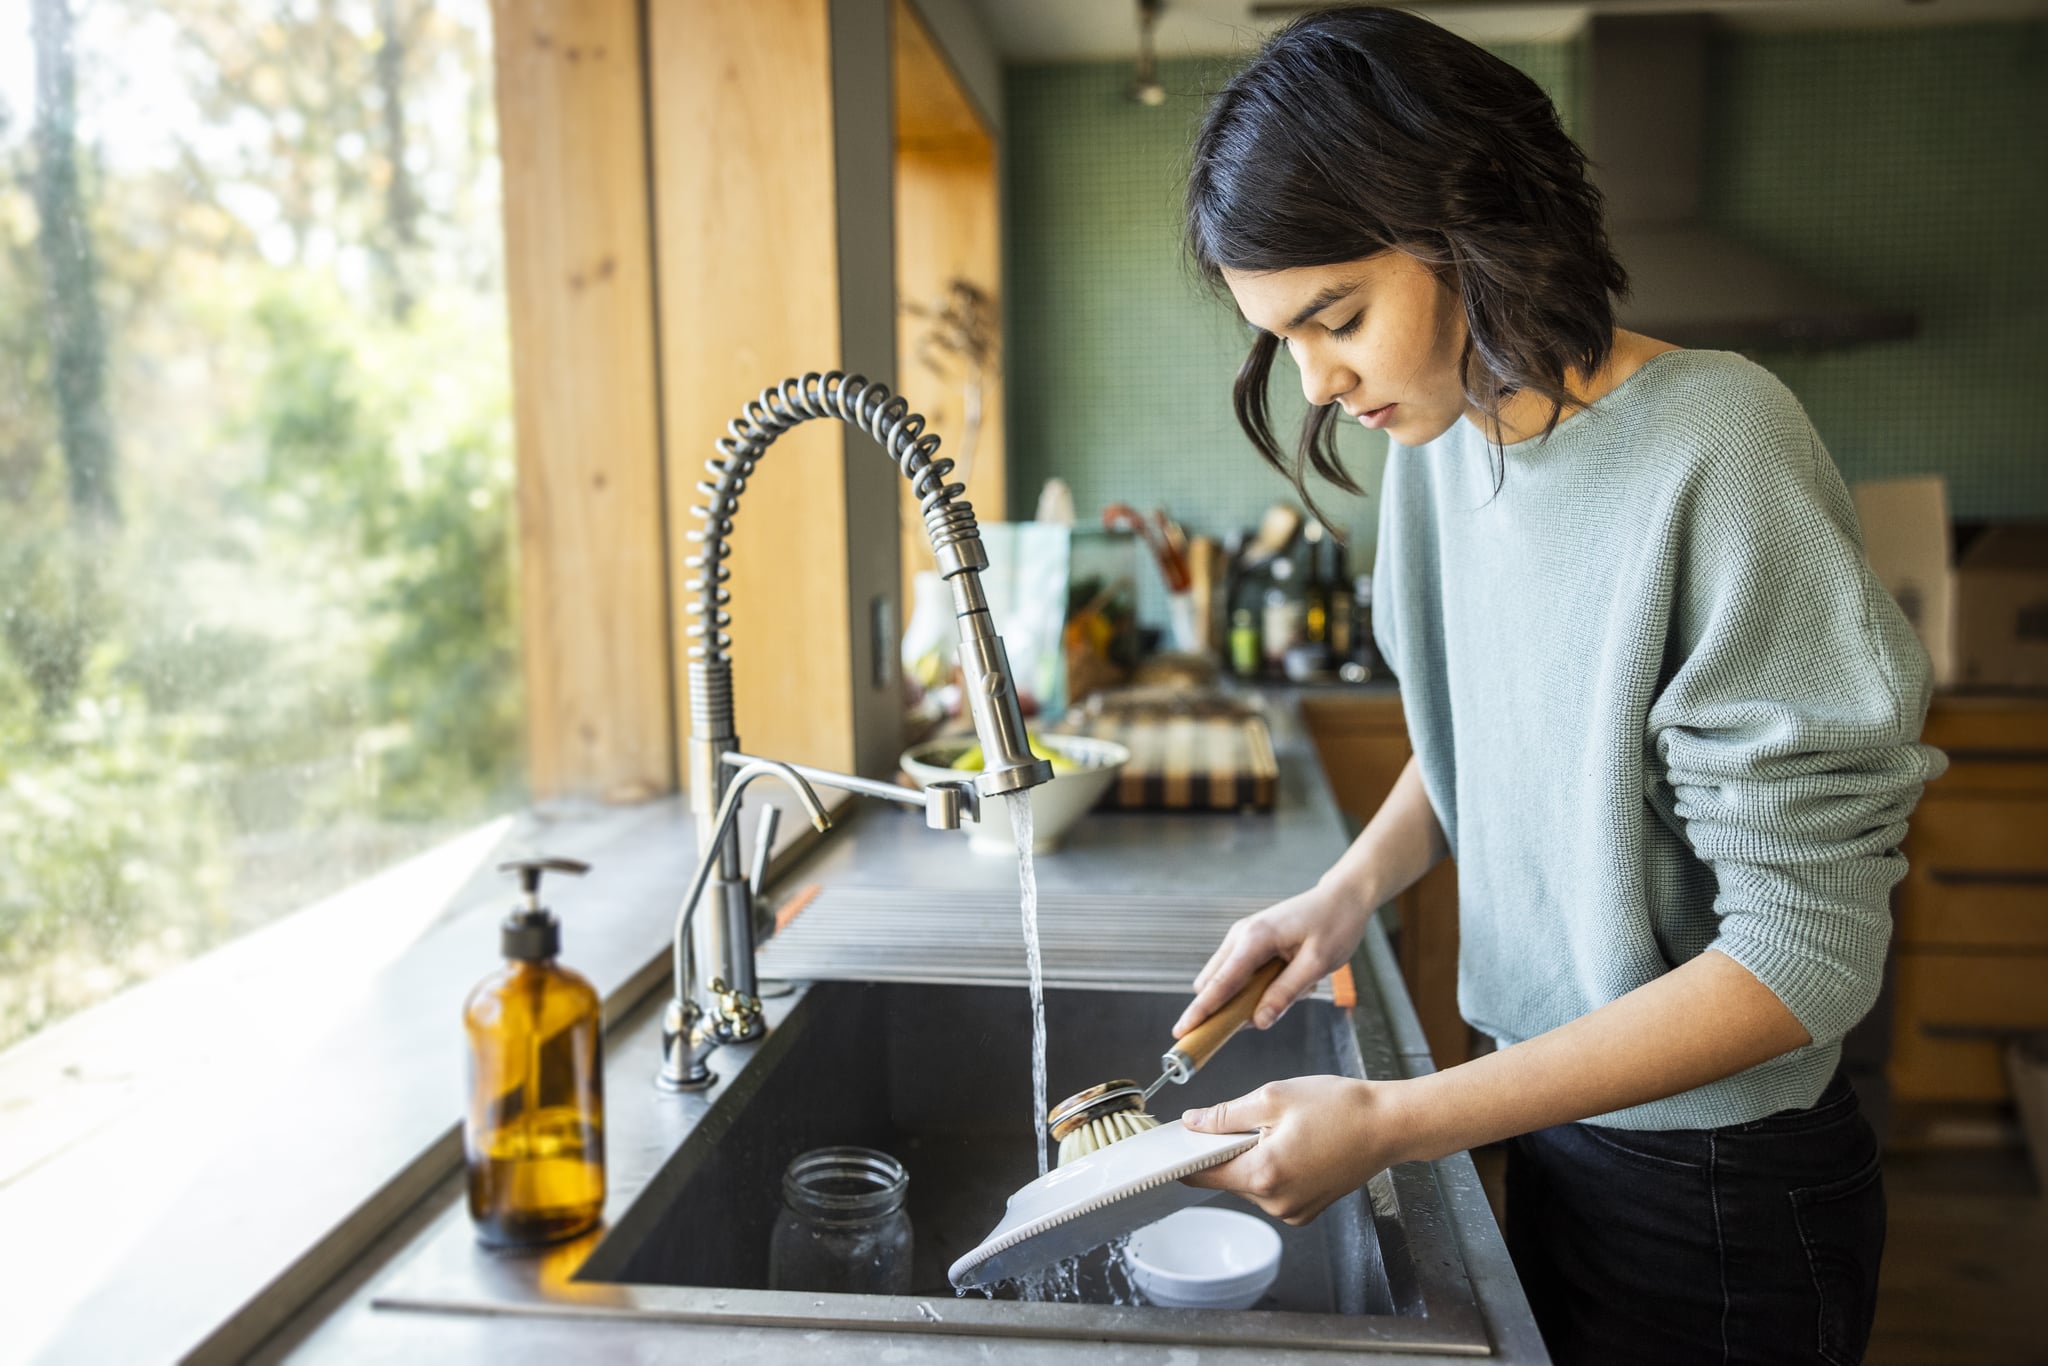 Teenage girl washing dishes in kitchen